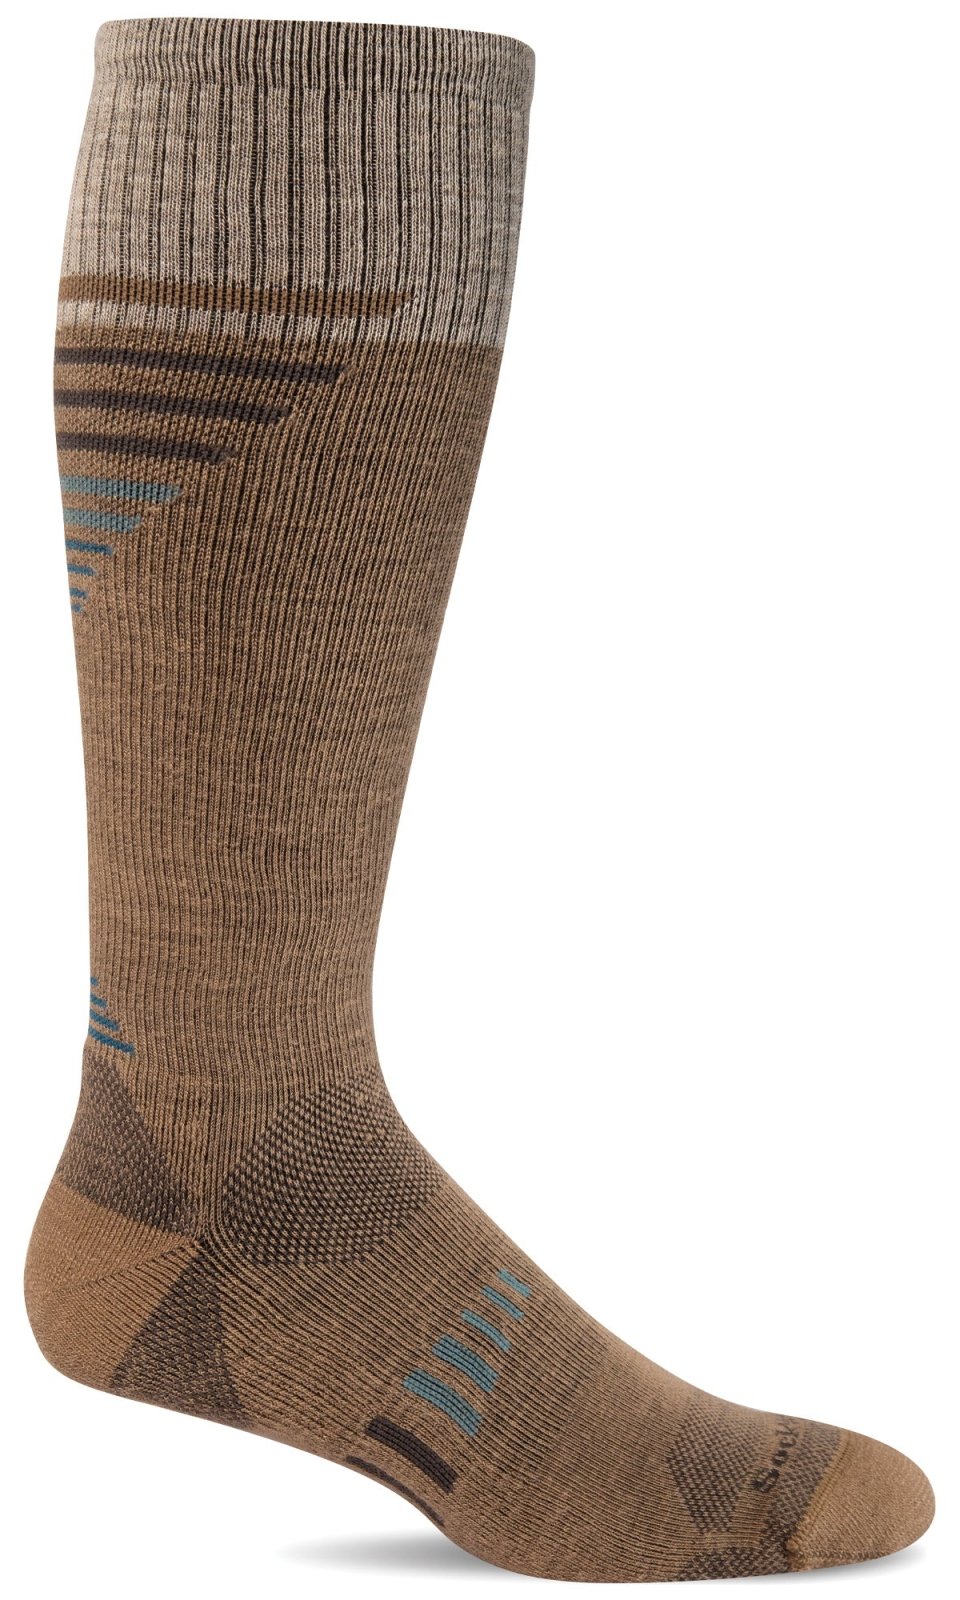 Men's Ascend II OTC | Moderate Graduated Compression Socks - Merino Wool Sport Compression - Sockwell